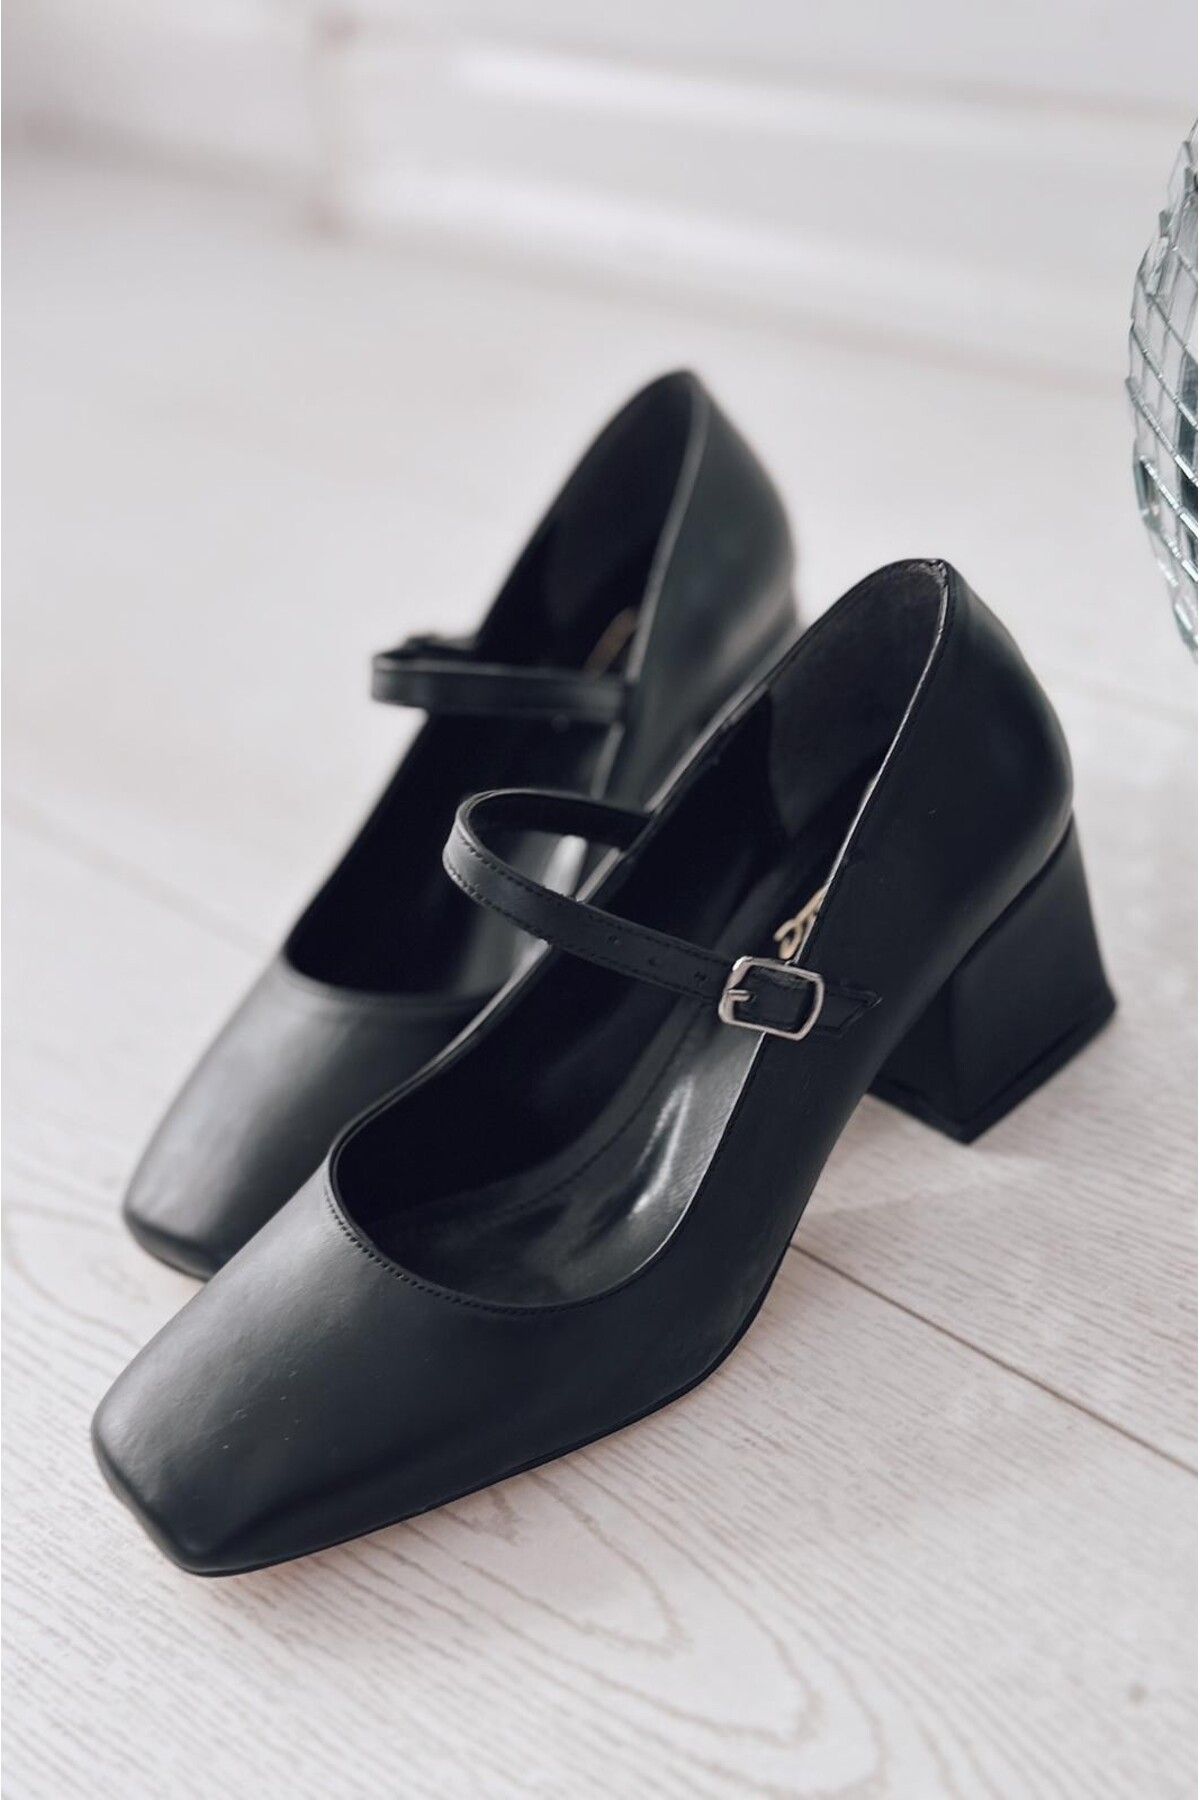 I Love Shoes Monse Mat Deri Mary Jane Kadın Topuklu Ayakkabı Siyah